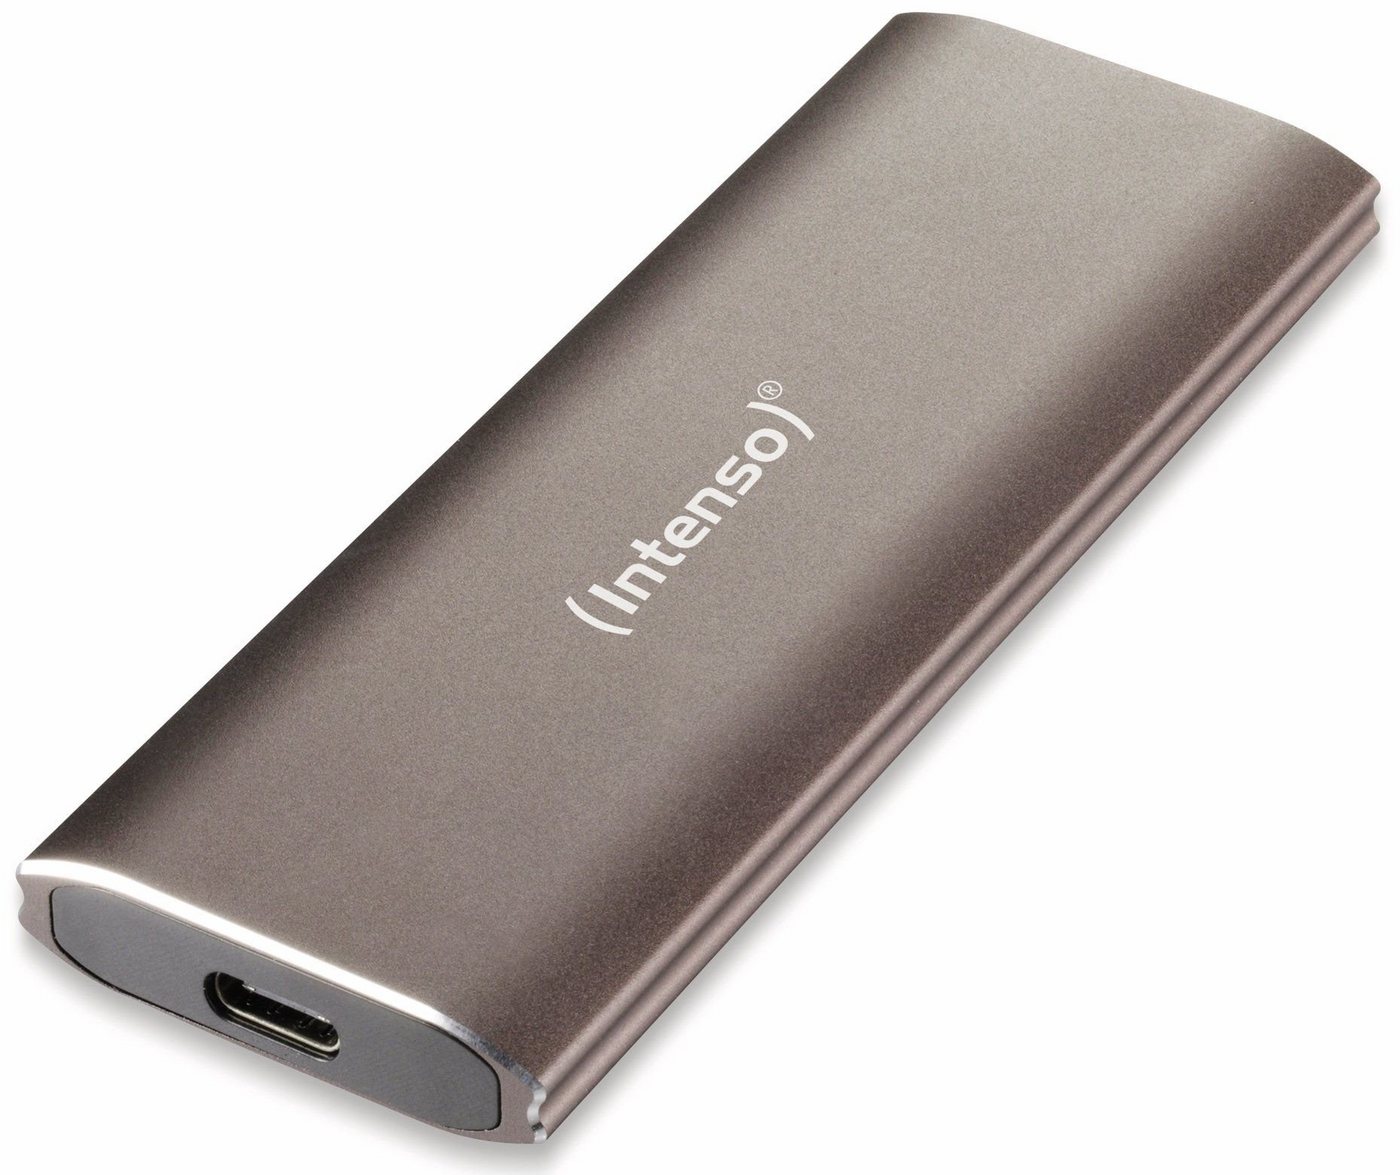 Intenso INTENSO USB 3.1 Gen2 SSD Professional, 250 GB externe SSD von Intenso